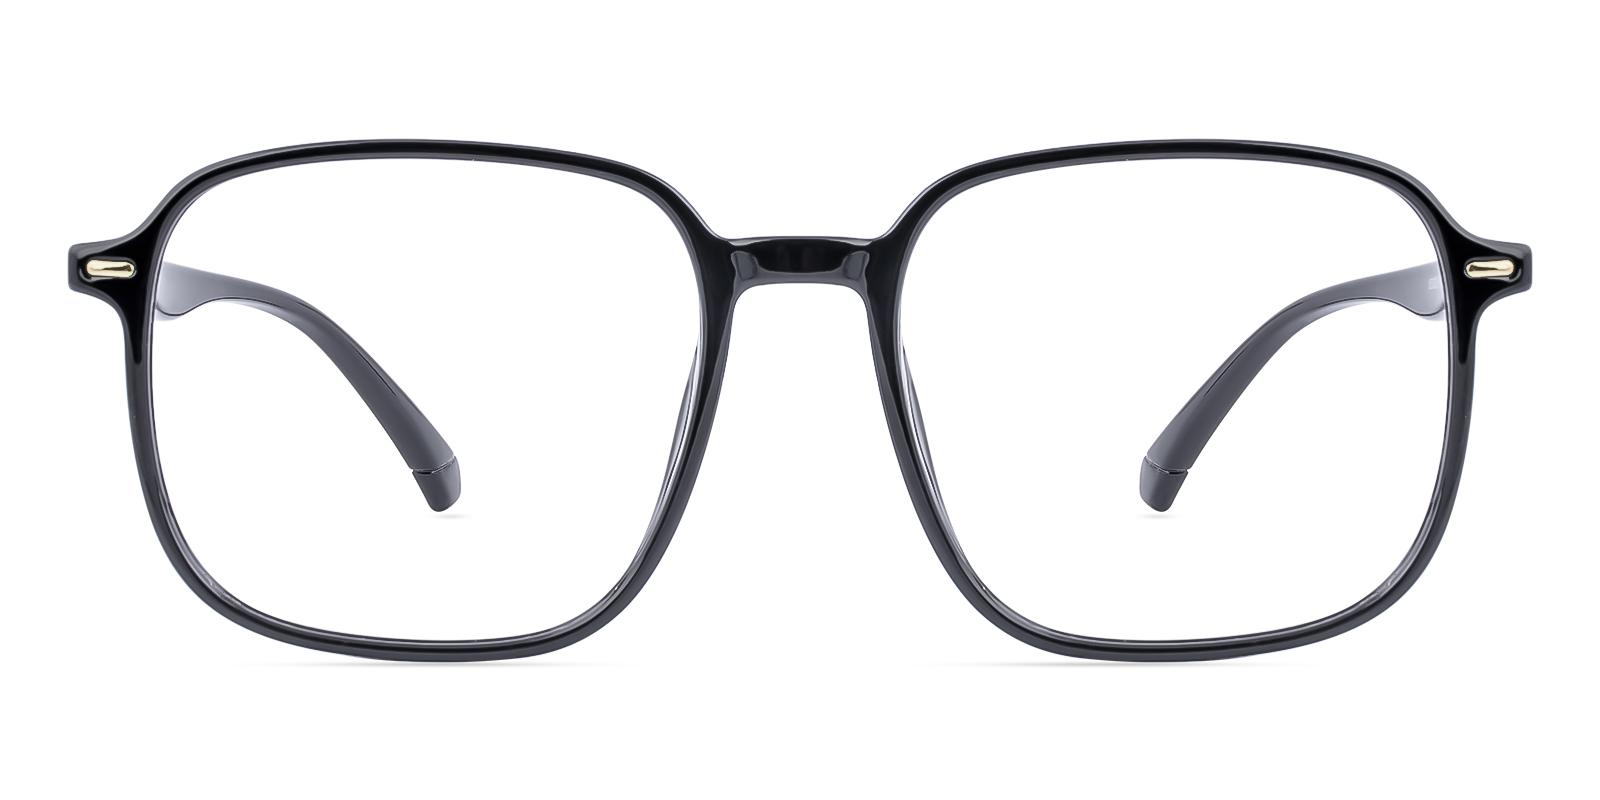 Phoarium Black Plastic Eyeglasses , UniversalBridgeFit Frames from ABBE Glasses